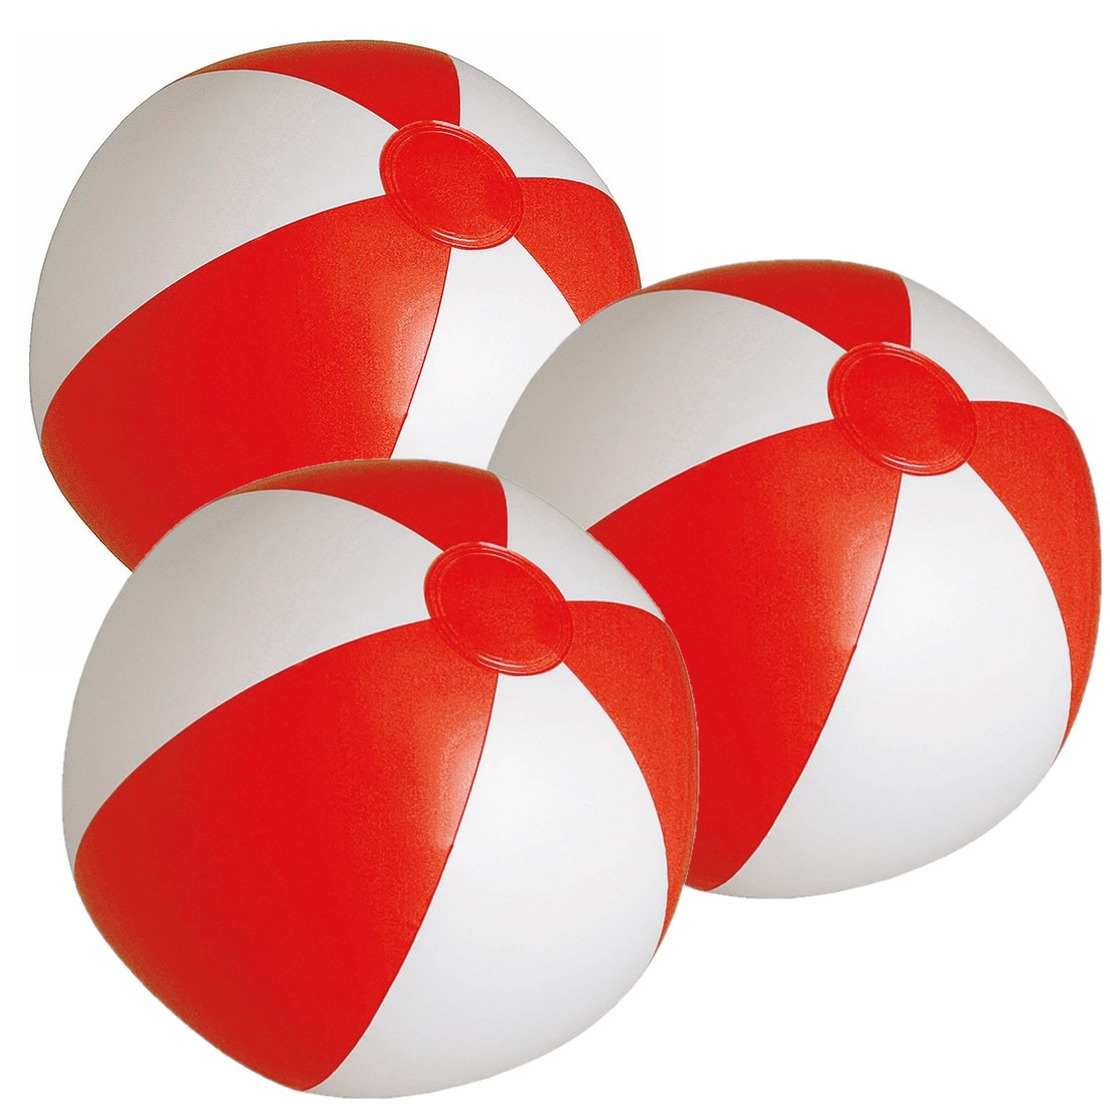 10x stuks opblaasbare zwembad strandballen plastic rood-wit 28 cm